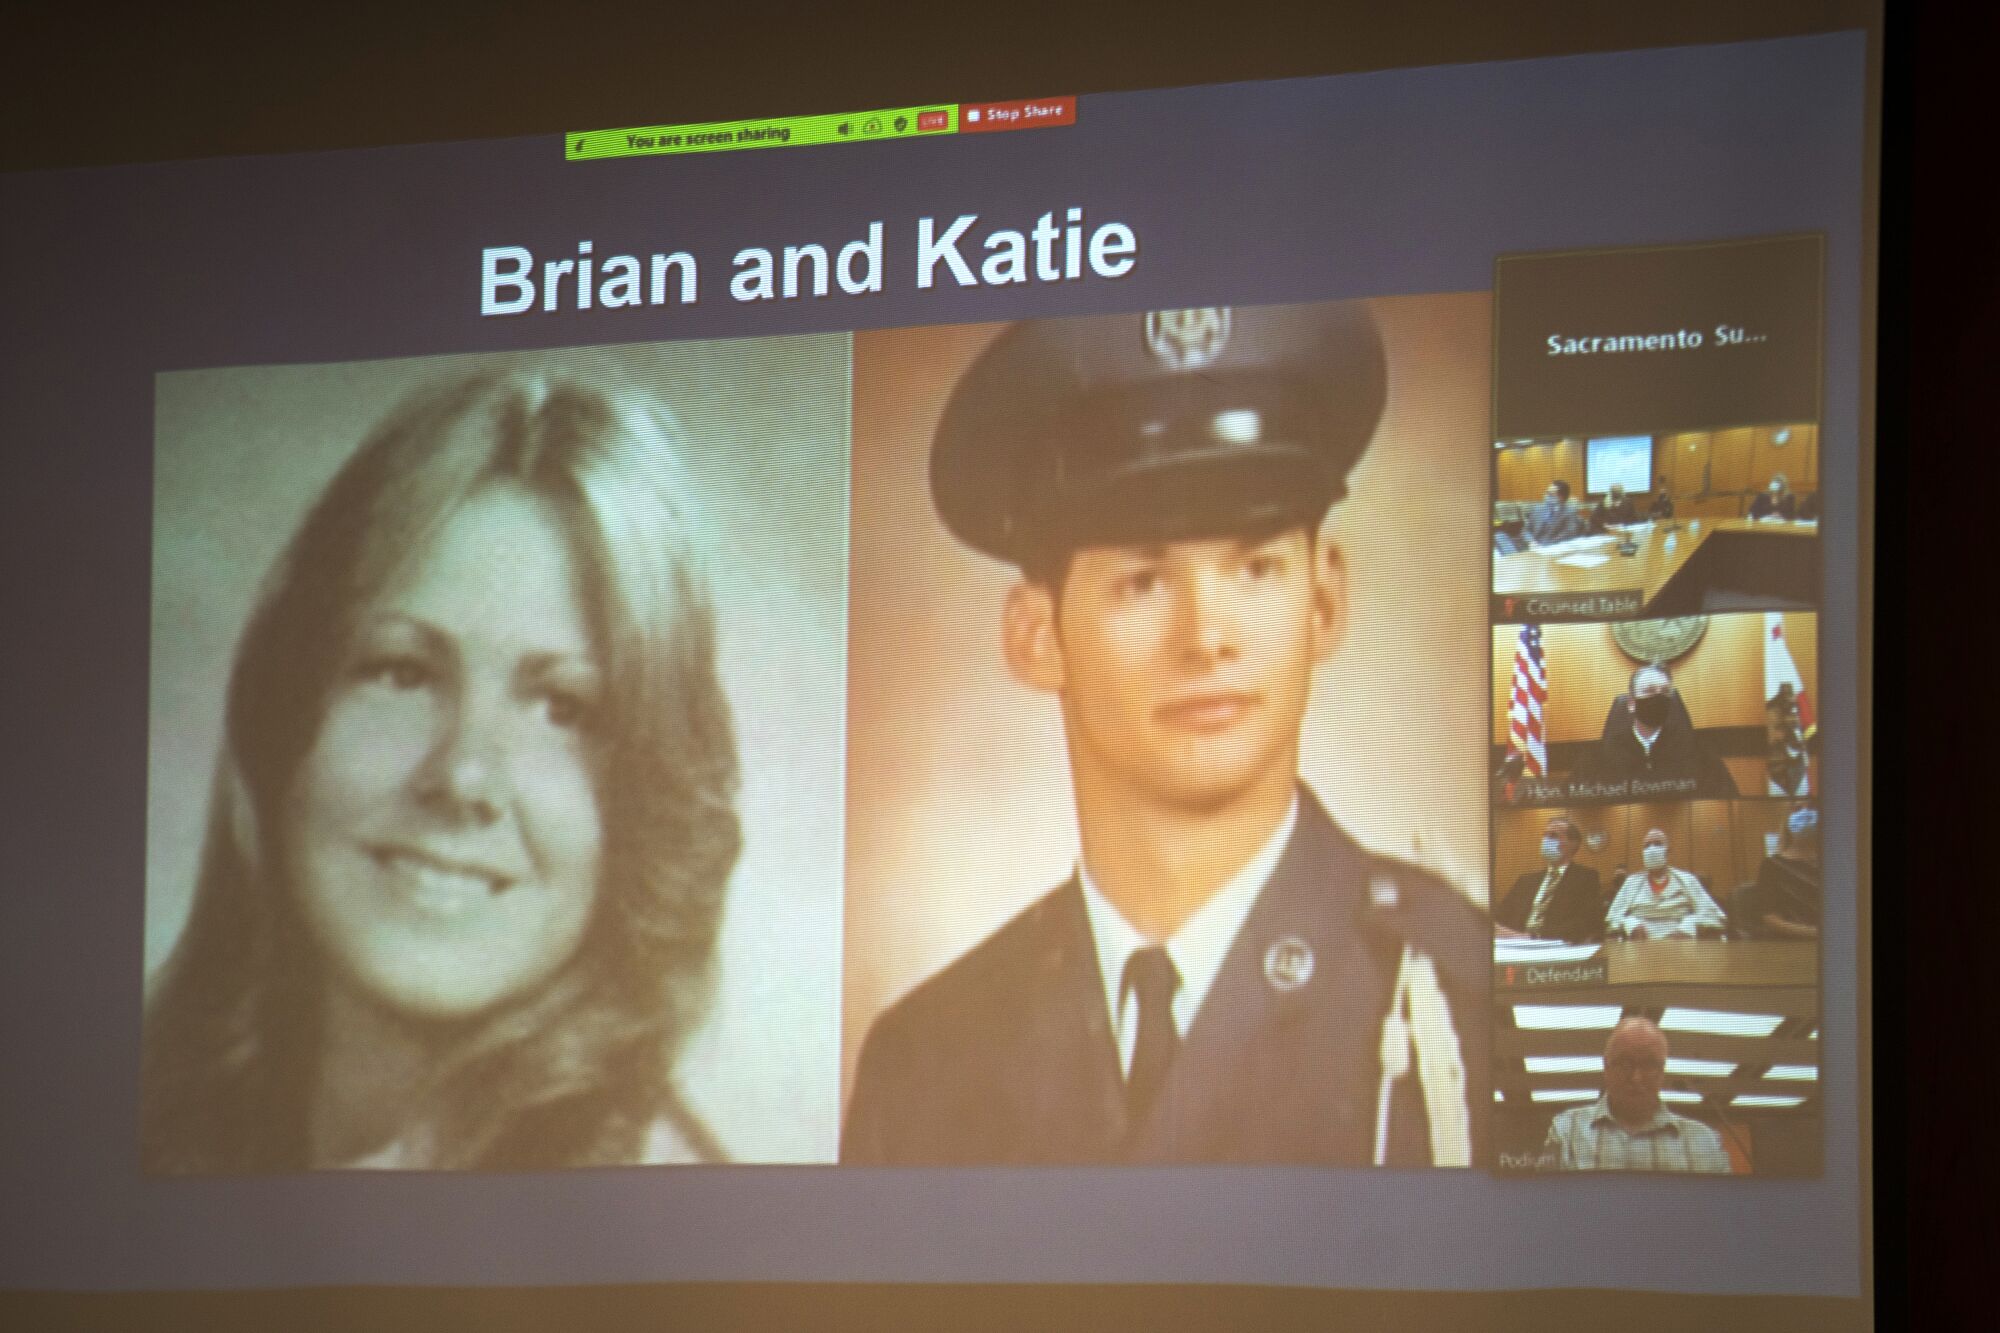 Photos of Katie Maggiore and Brian Maggiore are projected onto a screen